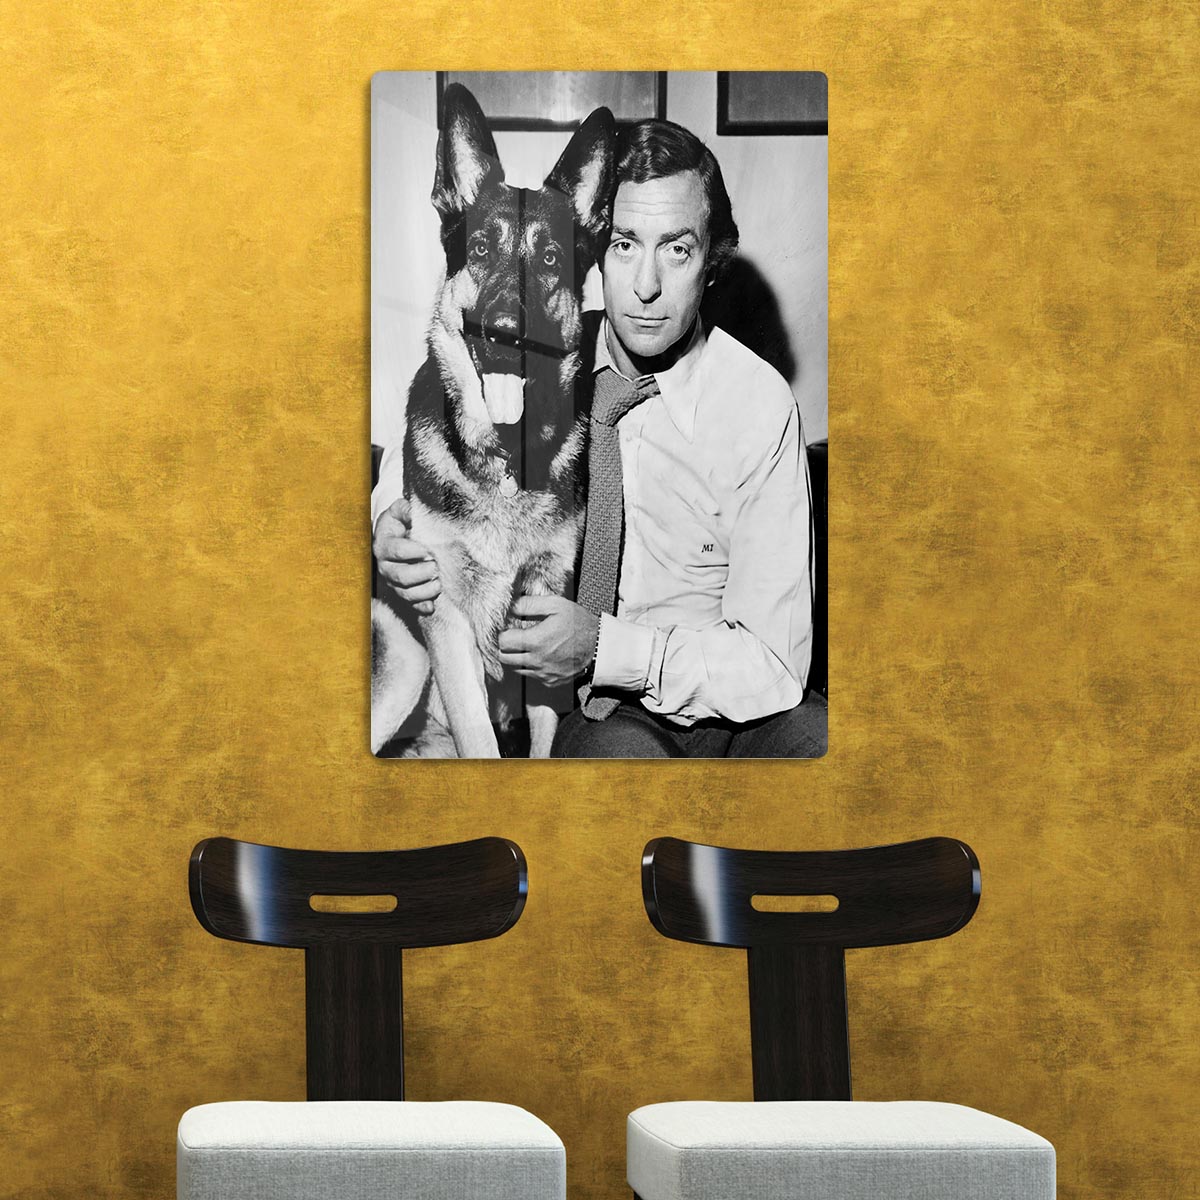 Michael Caine and dog HD Metal Print